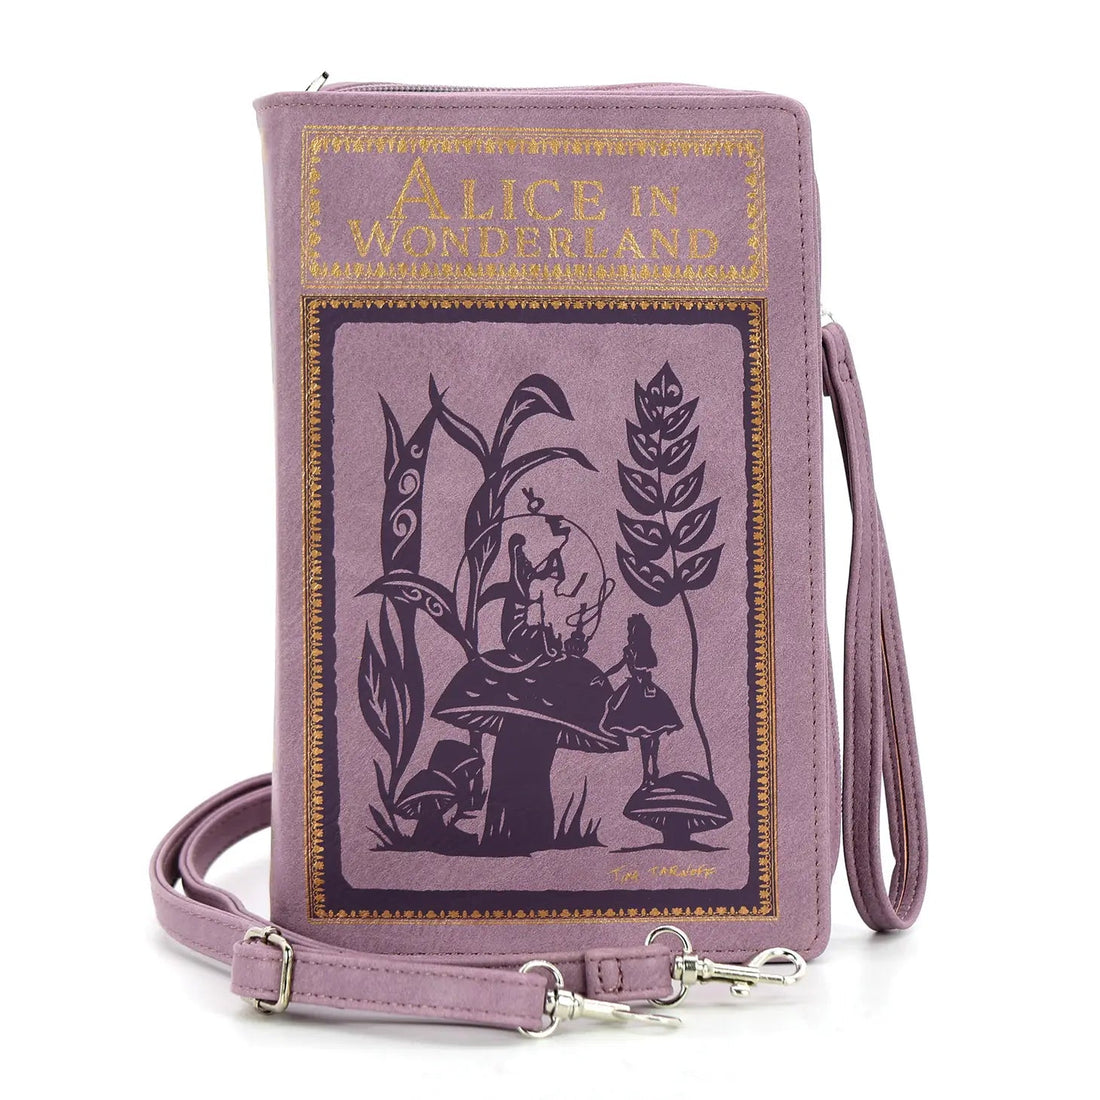 Shop Alice in Wonderland Book Clutch Bag in Vinyl - Premium Clutch Bag from Comeco INC Online now at Spoiled Brat 